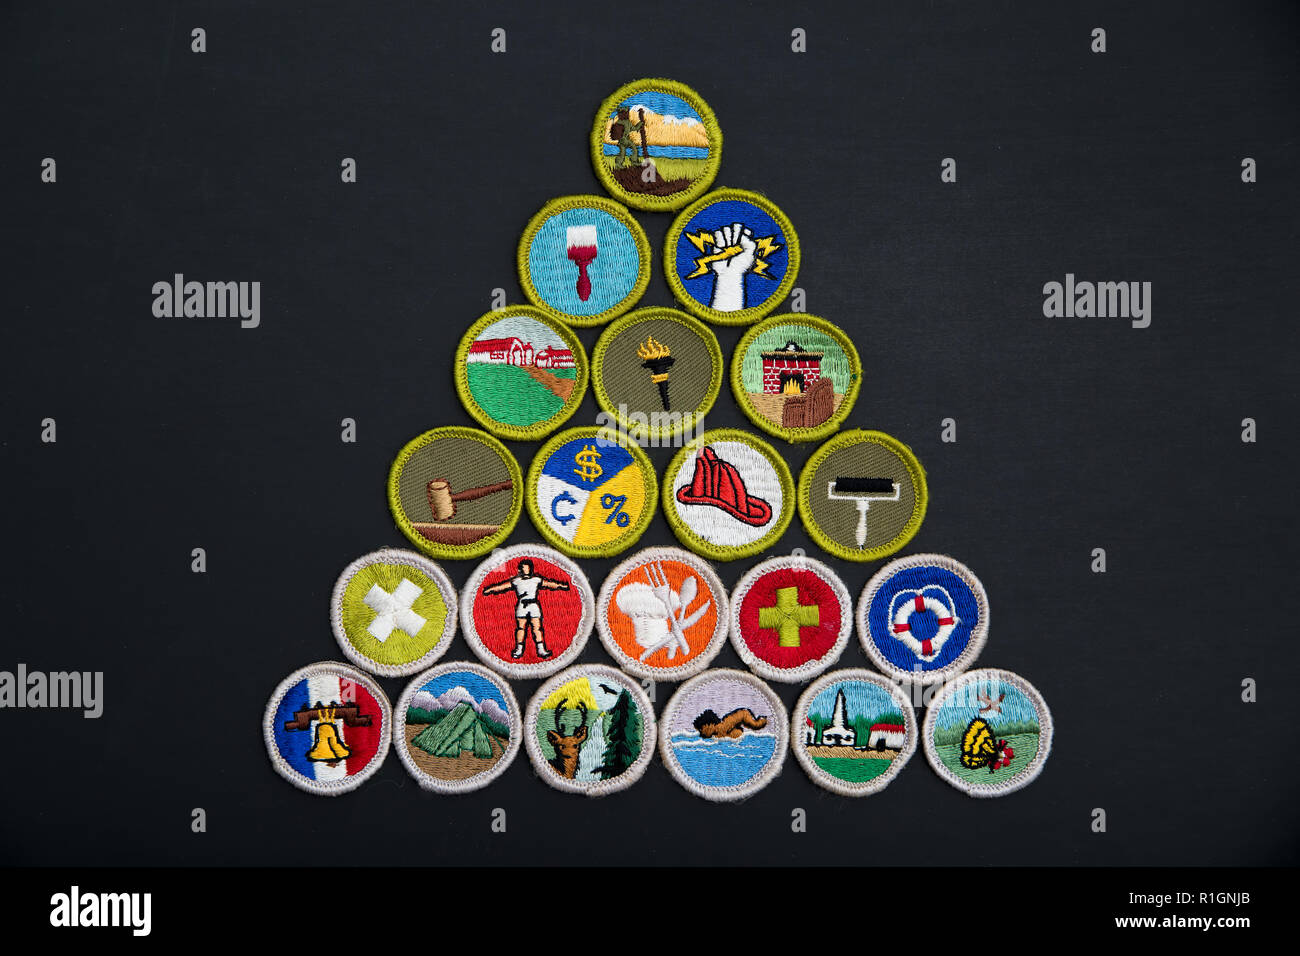 SAINT LOUIS, UNITED STATES - AUG 22, 2018:  A pyramidal arrangement of Boy Scouts of America (BSA) merit badges on black background Stock Photo